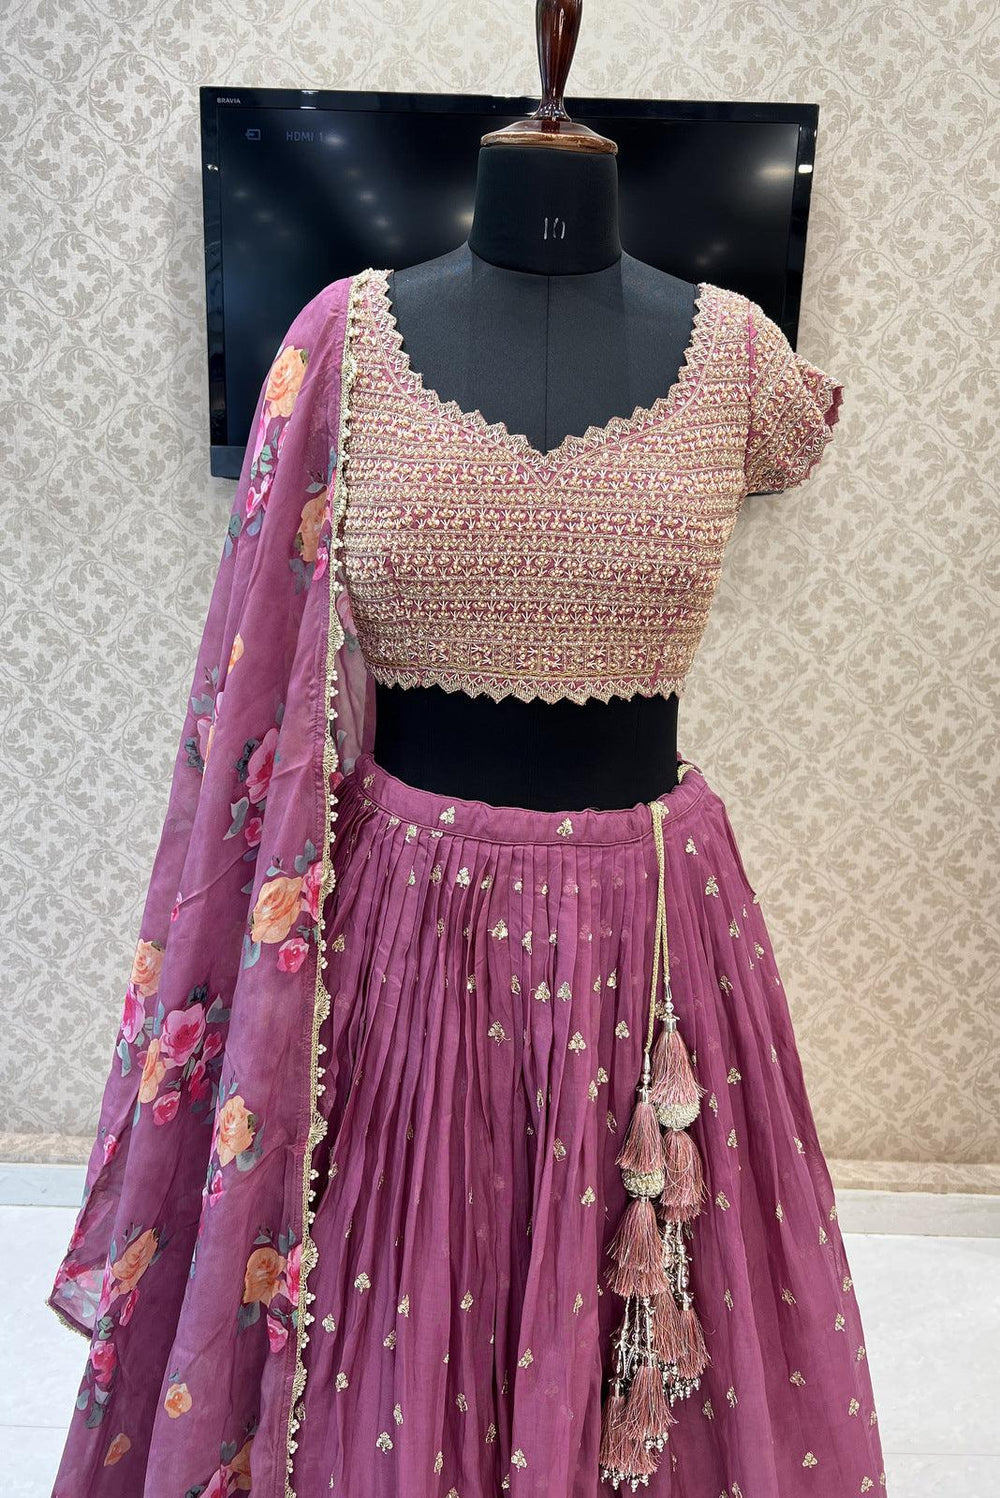 Onion Pink Pearl, Zardozi, Beads, Zari and Sequins work Crop Top Lehenga - Seasons Chennai